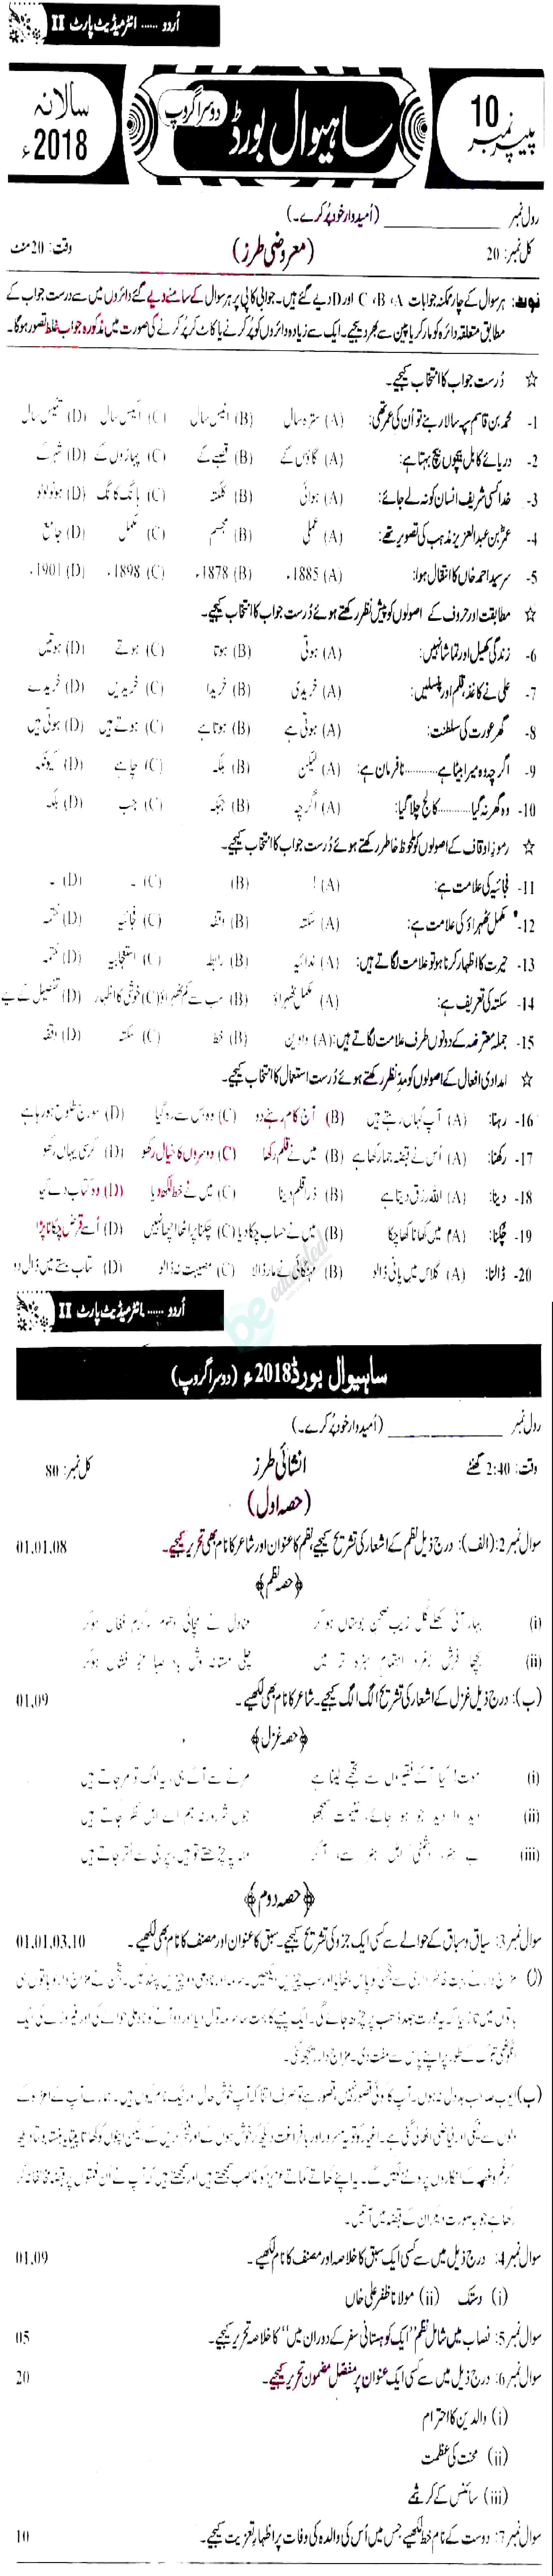 Urdu 12th class Past Paper Group 2 BISE Sahiwal 2018